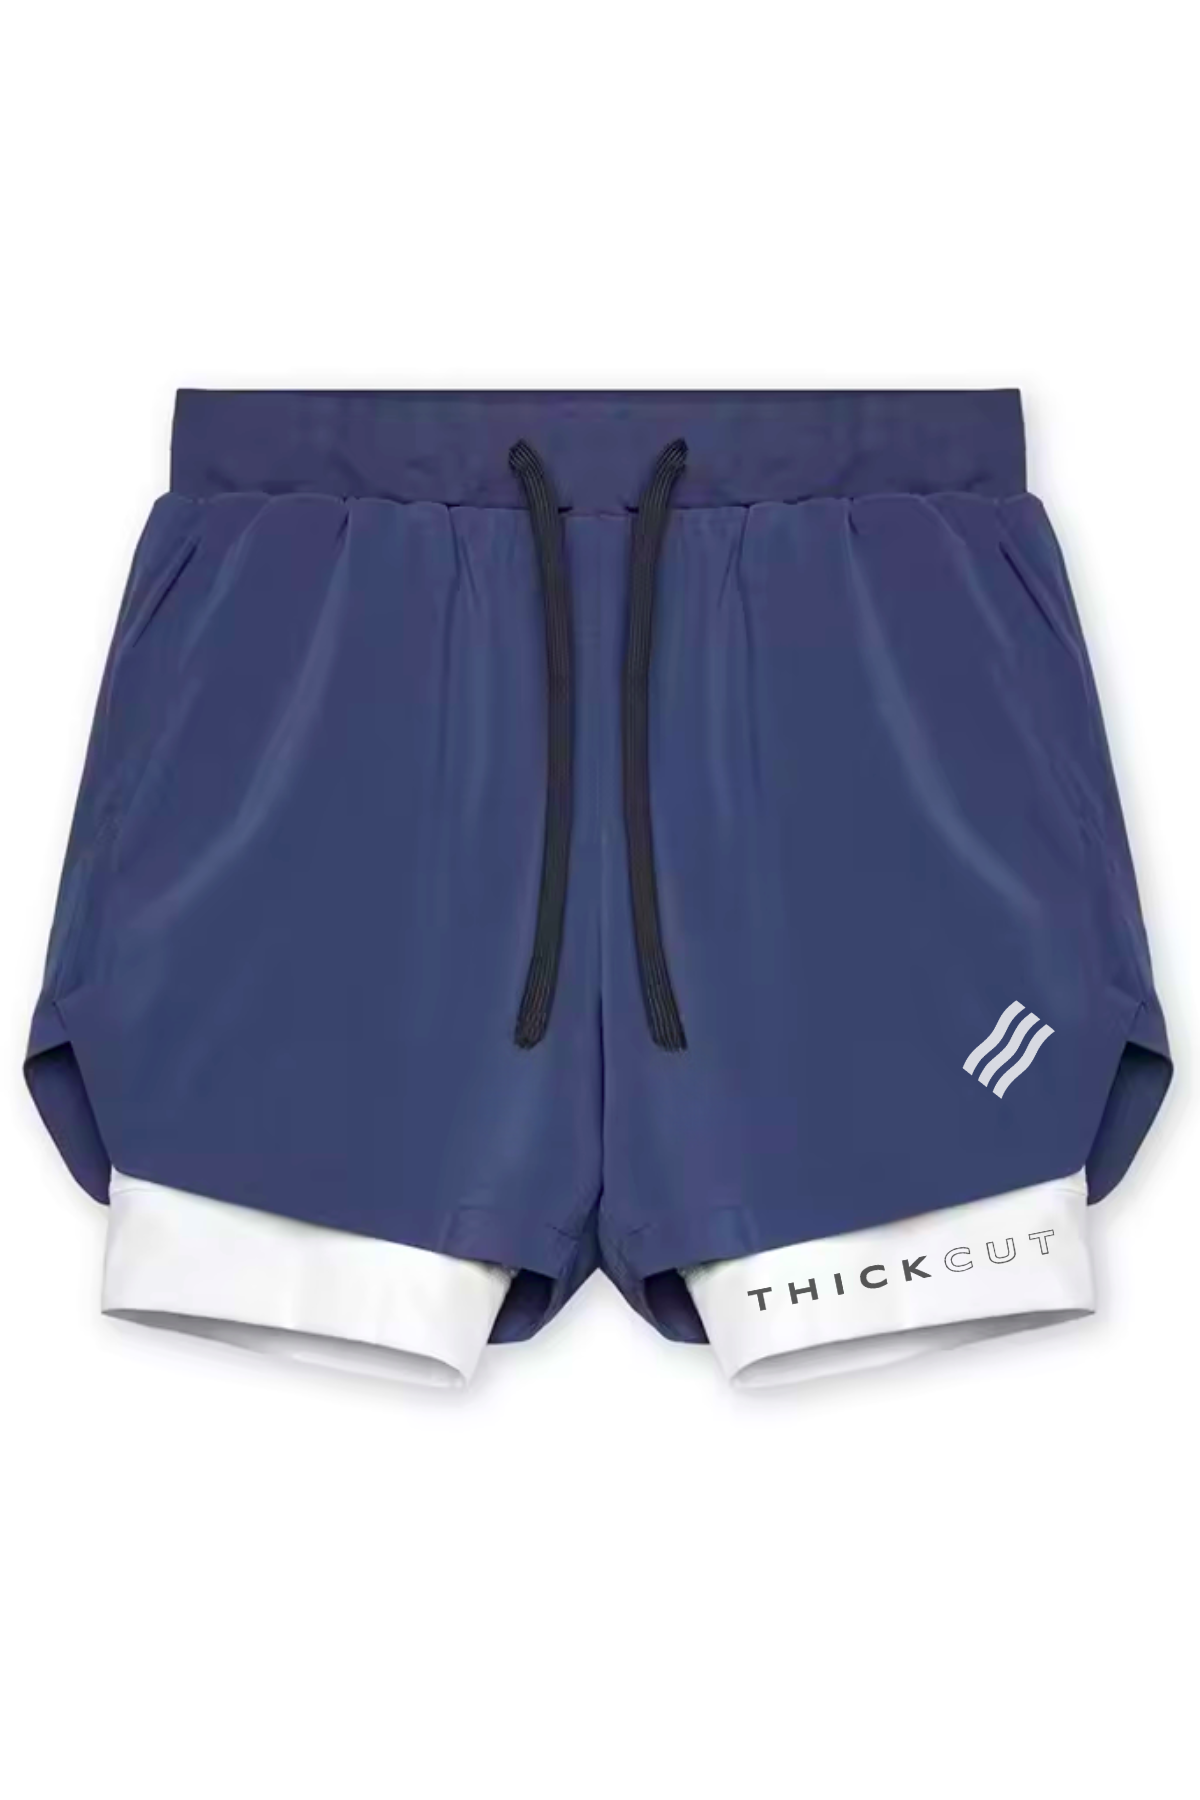 Dual Layer Training Shorts (Blue)